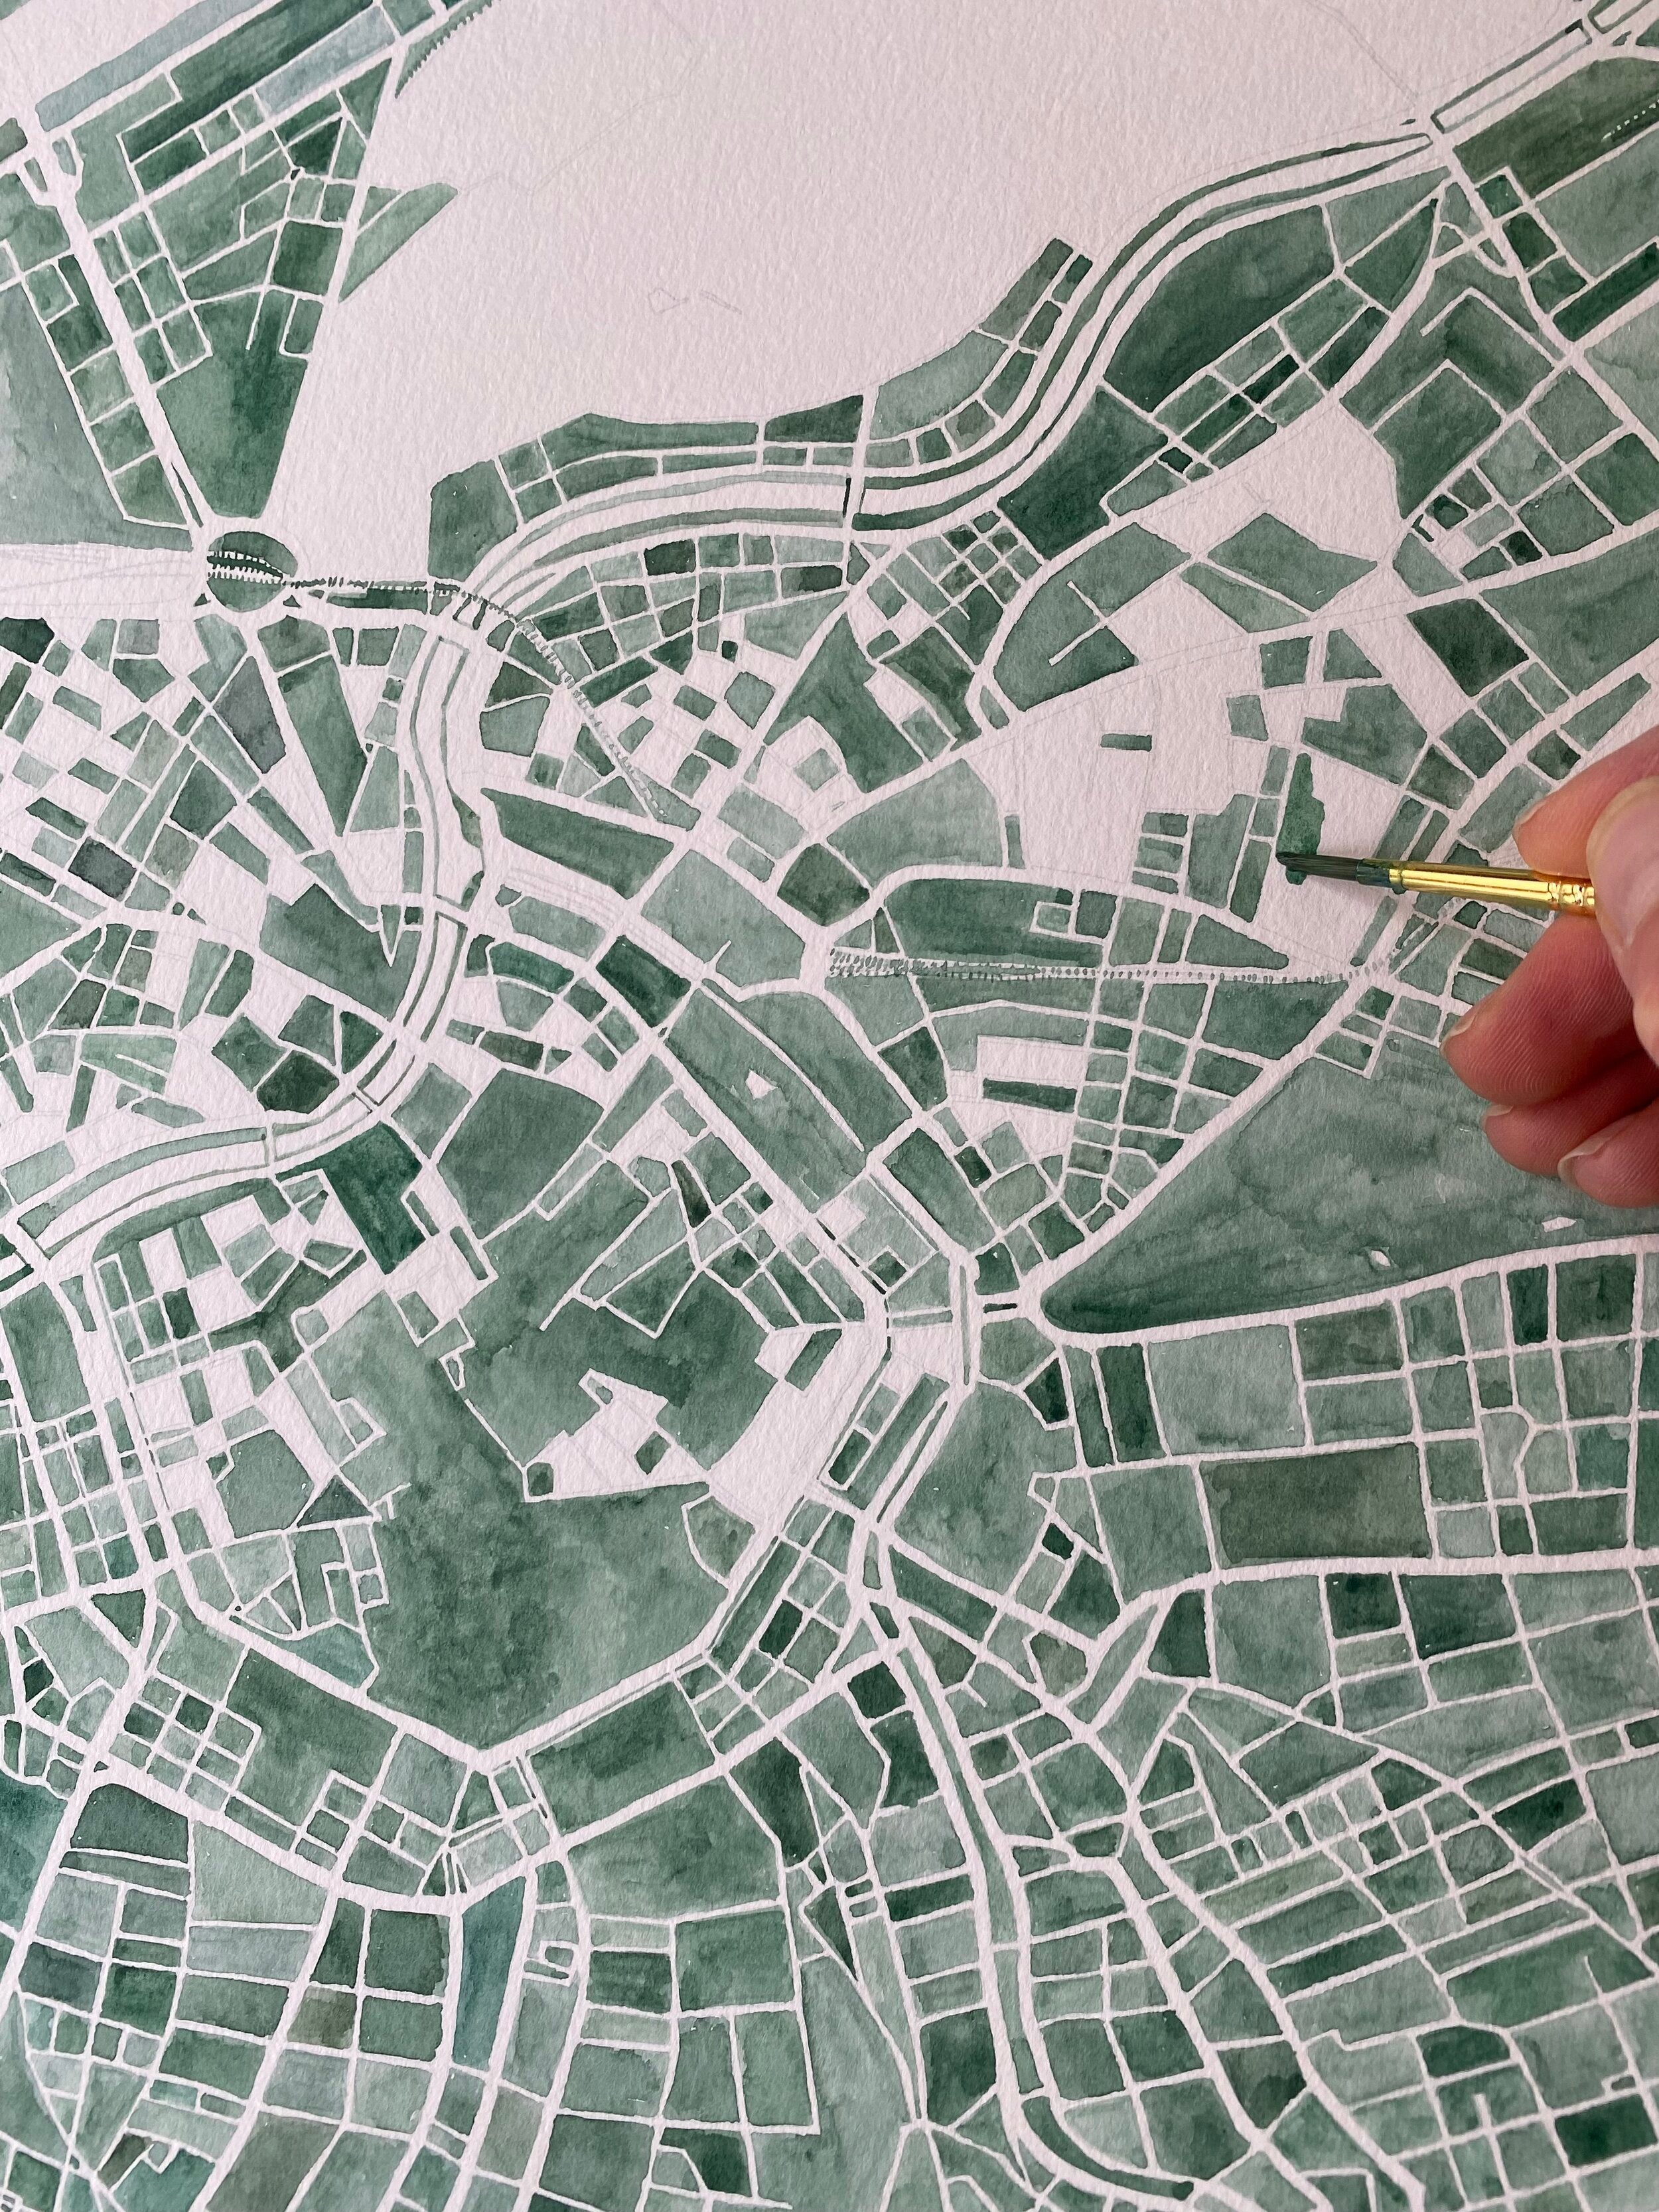 VIENNA Watercolor City Blocks Map: ORIGINAL PAINTING